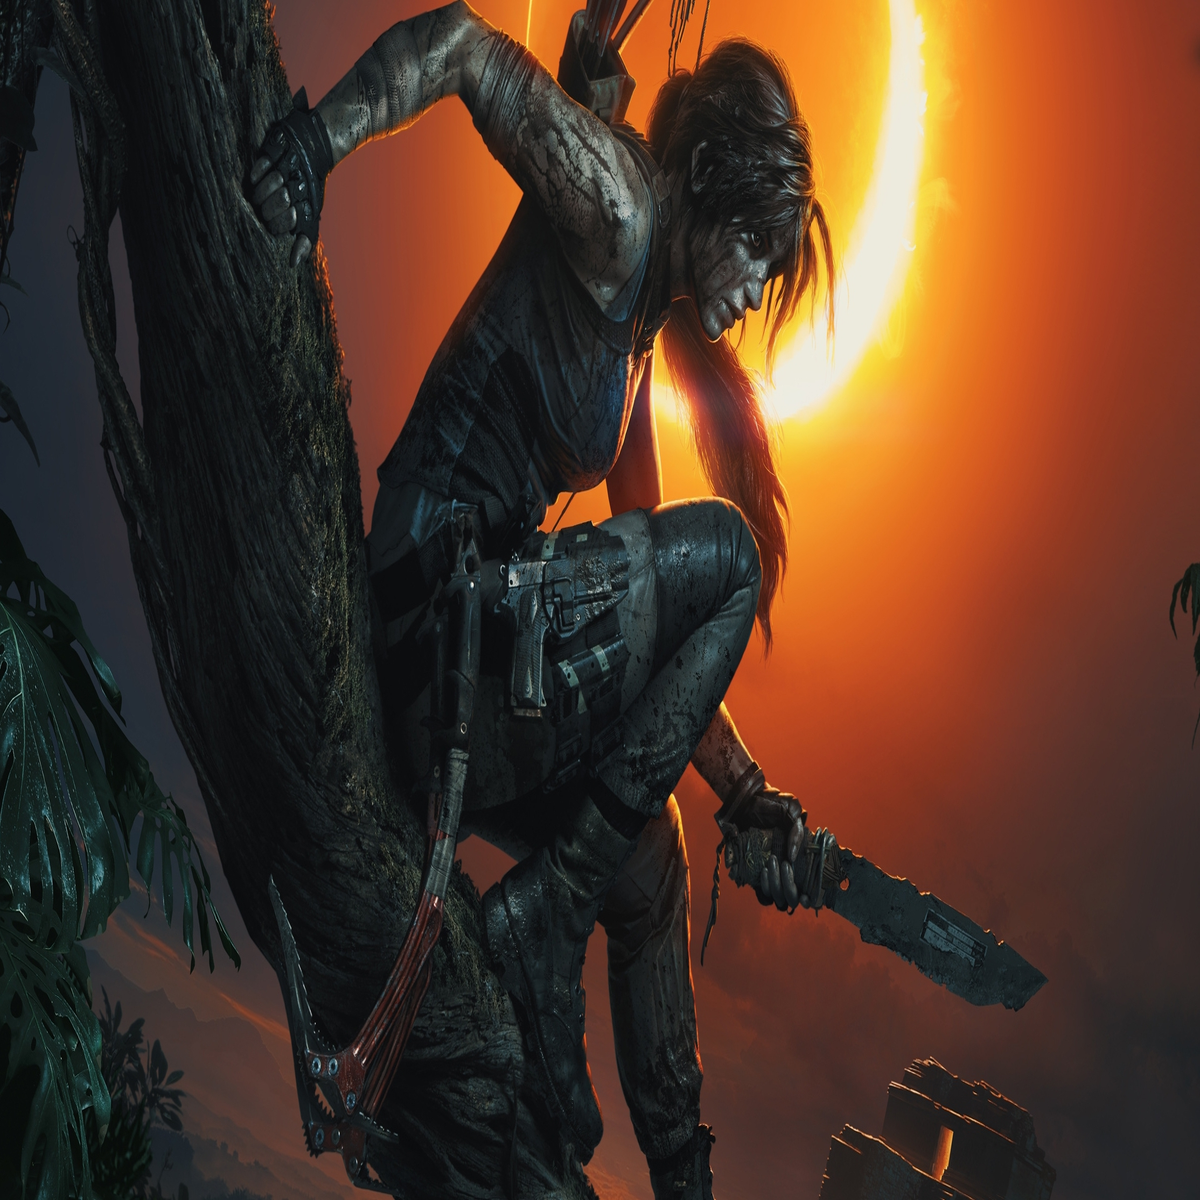 Tomb Raider: entenda a linha temporal completa do reboot da Lara